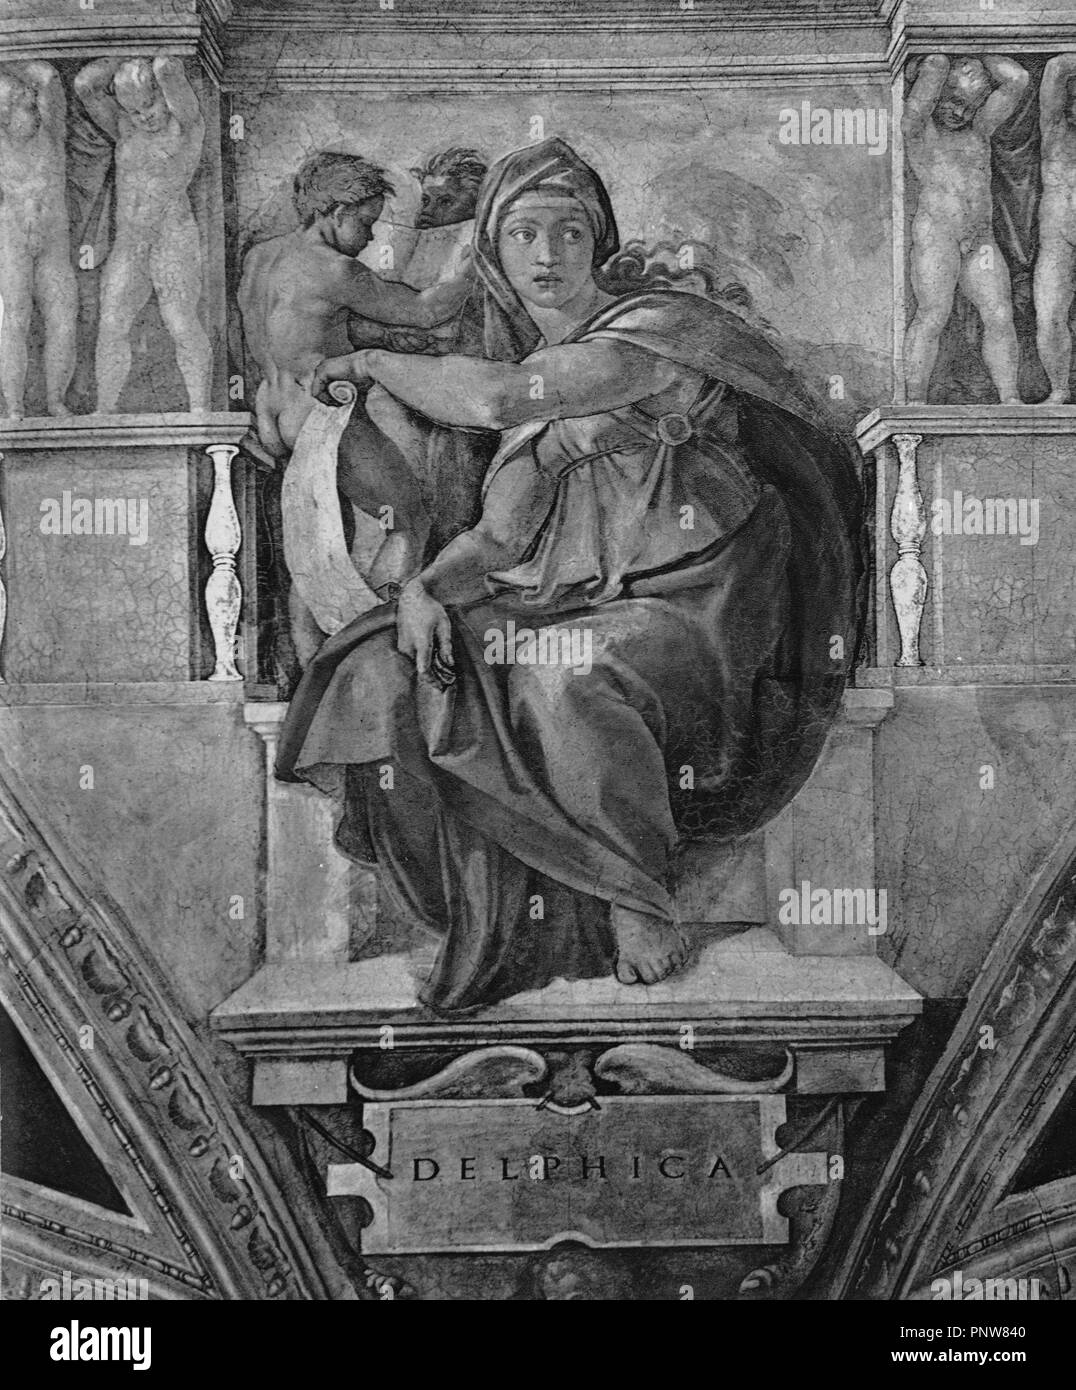 LA SIBILA DELPHICA - SIGLO XVI - RENACIMIENTO ITALIANO. Author: Michelangelo. Location: BIBLIOTECA NACIONAL-COLECCION. MADRID. SPAIN. Stock Photo